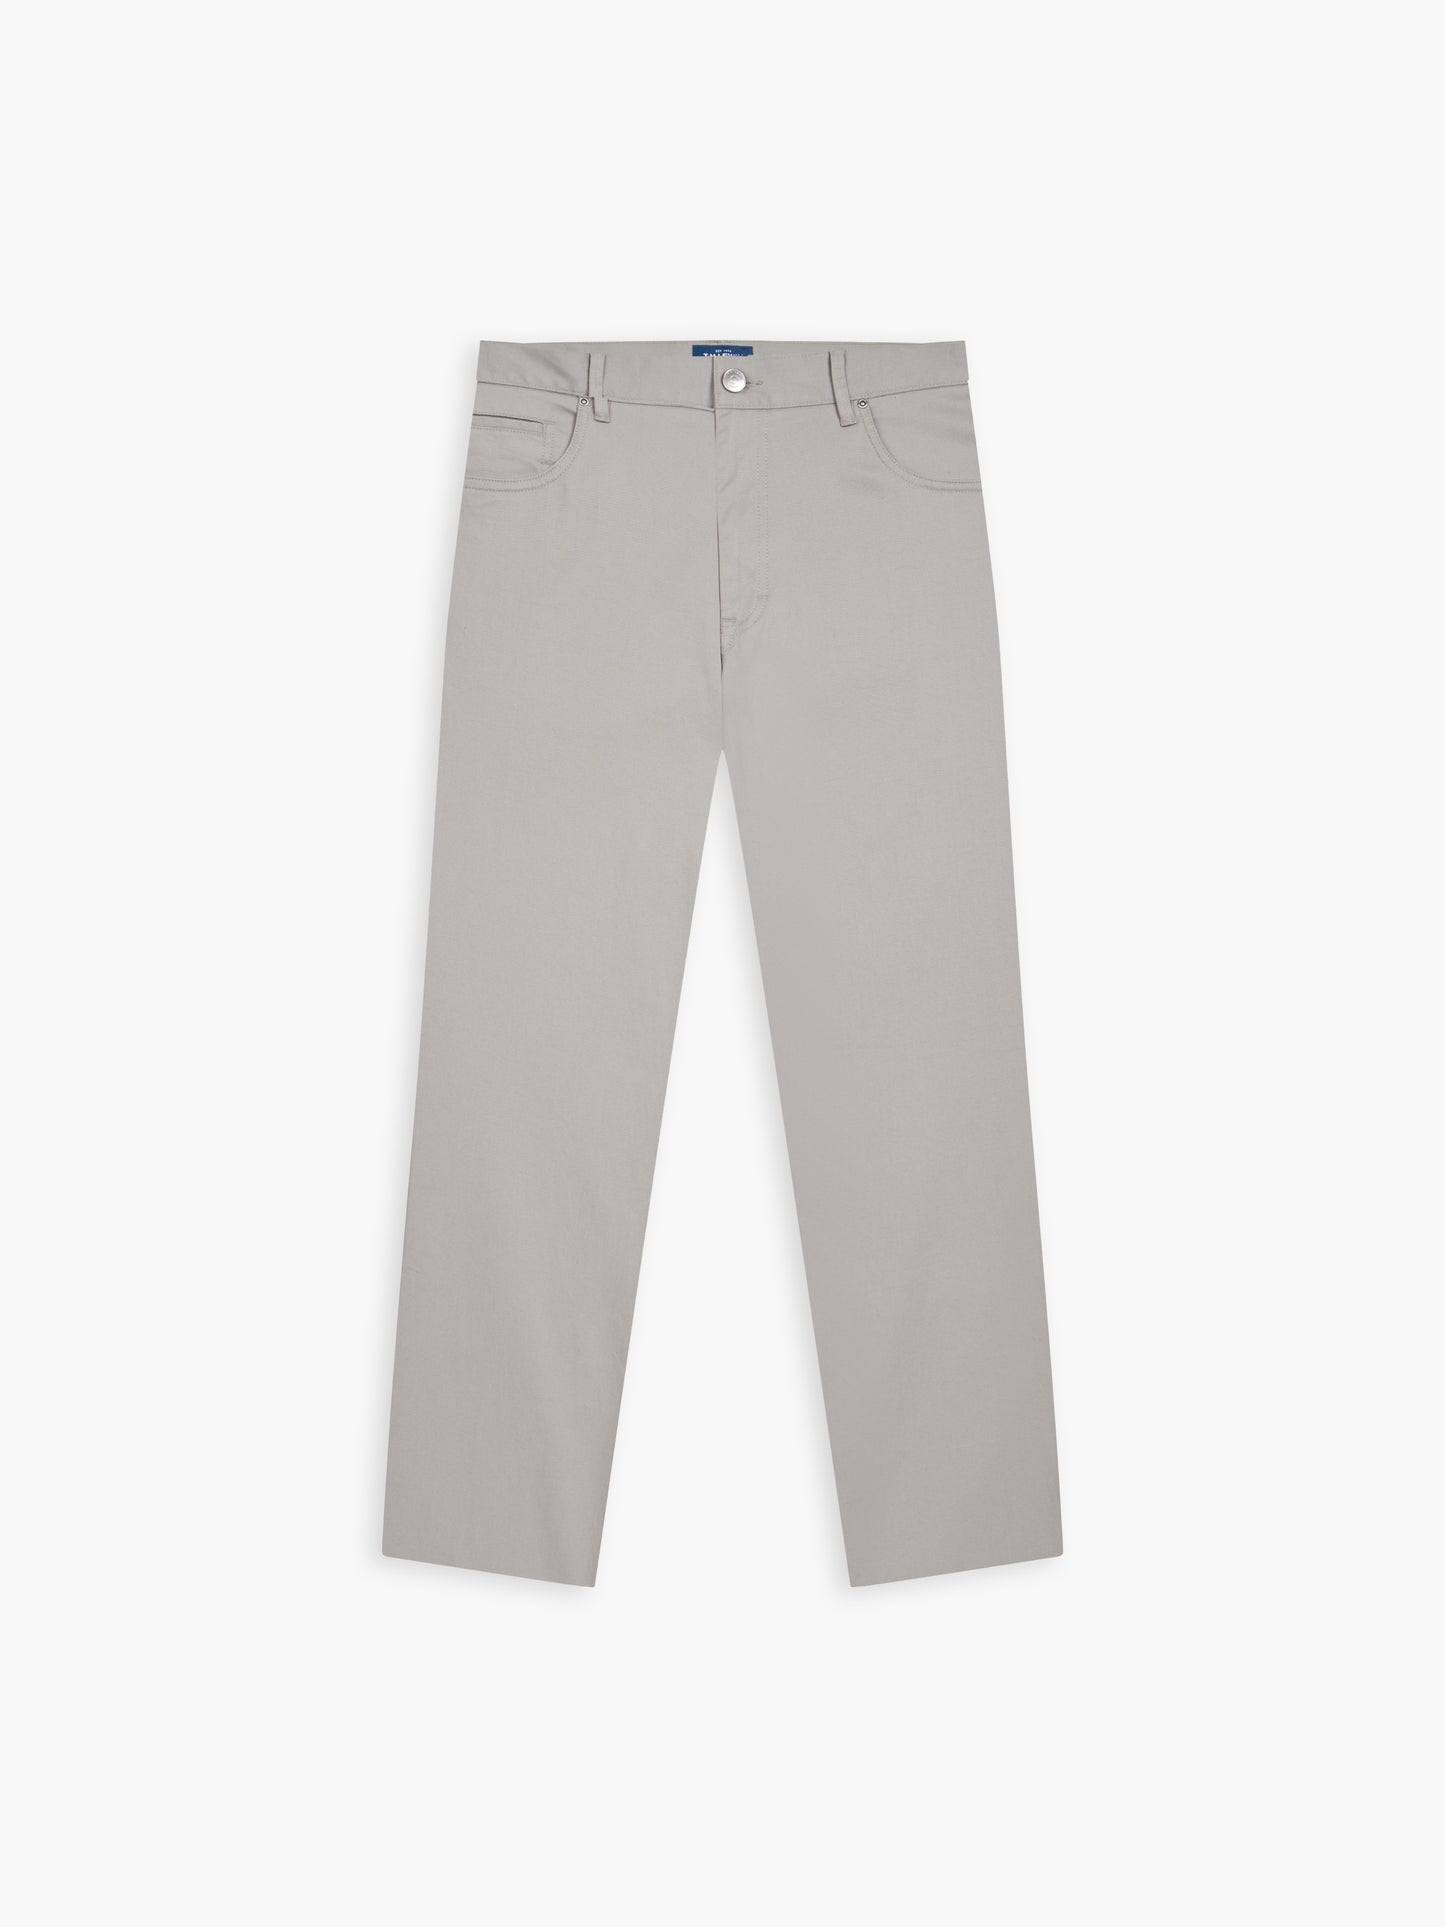 Madden Extra Slim Fit Stone 5-Pocket Trouser